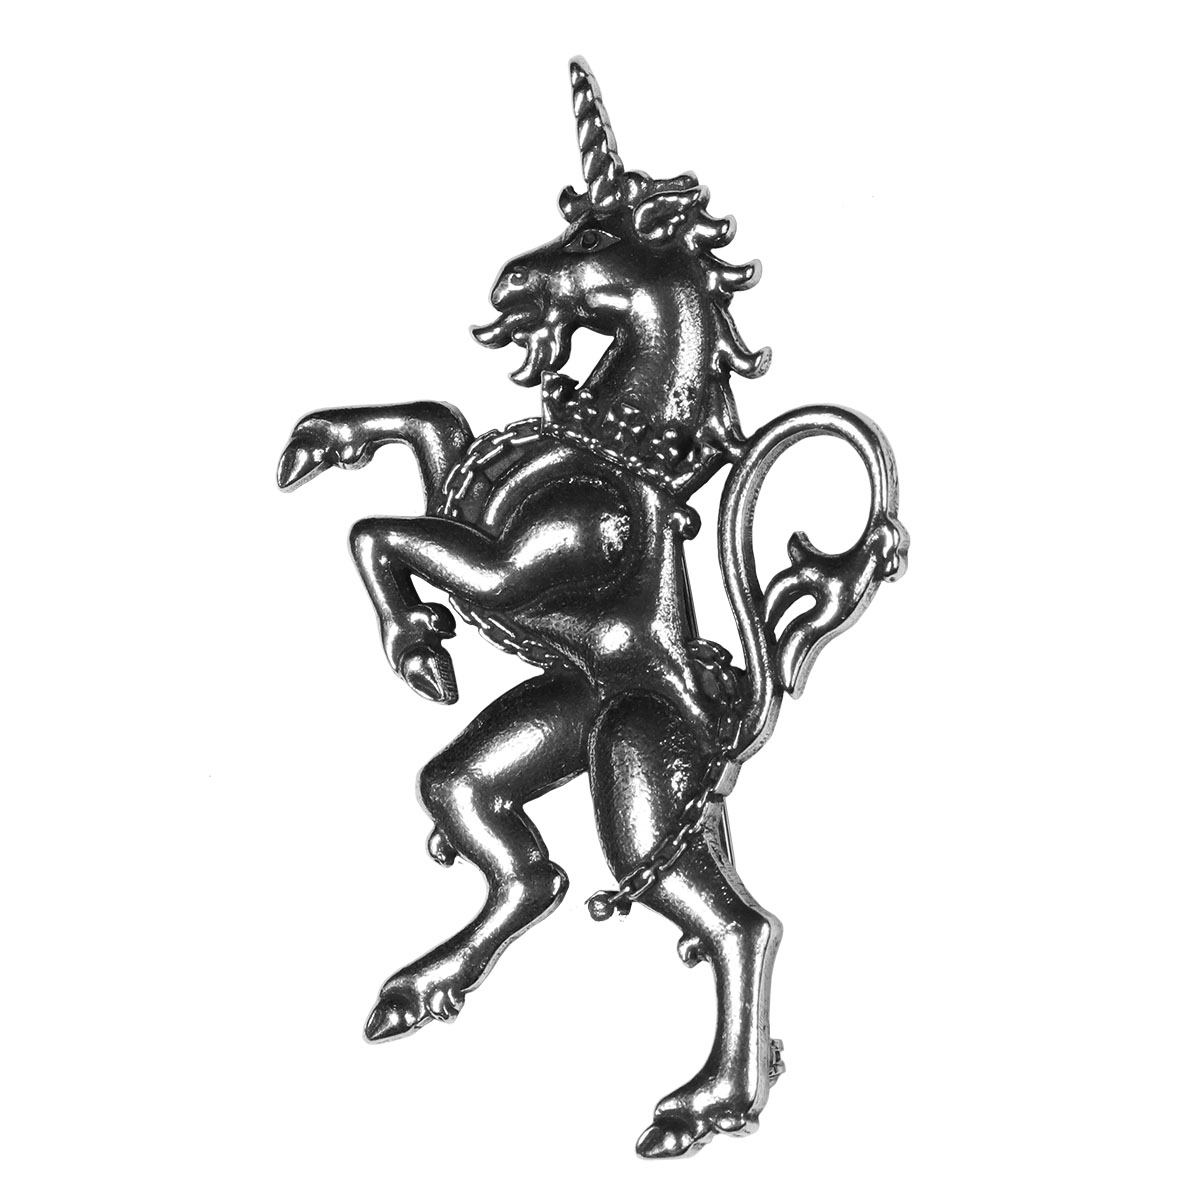 A silver Unicorn Rampant Kilt Pin/Brooch.